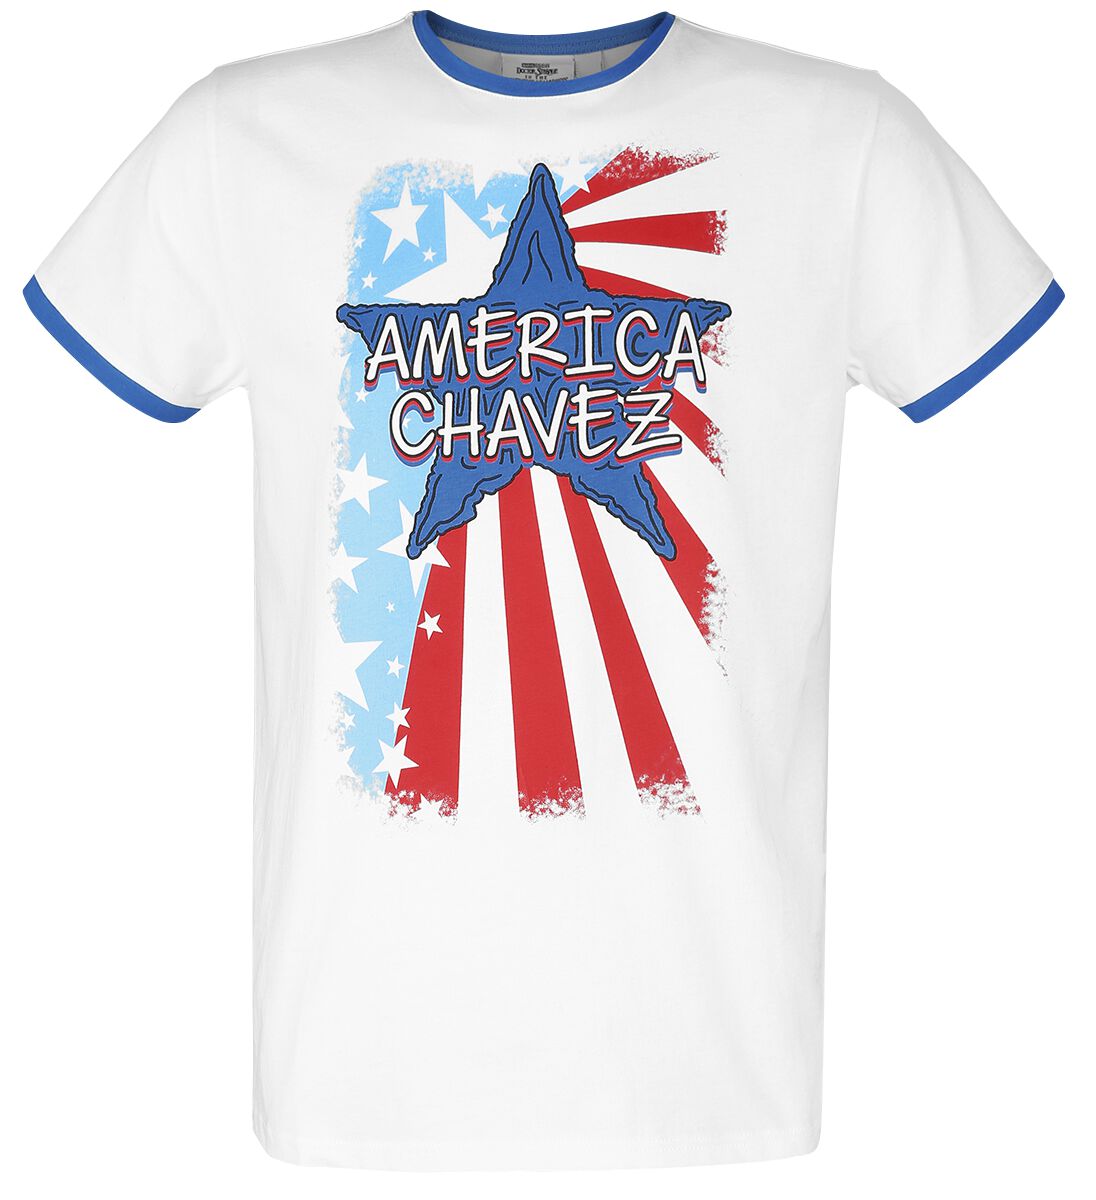 doctor strange - marvel t-shirt - in the multiverse of madness - america chavez - s bis l - fÃ¼r mÃ¤nner - grÃ¶ÃŸe s - - emp exklusives merchandise! weiÃŸ